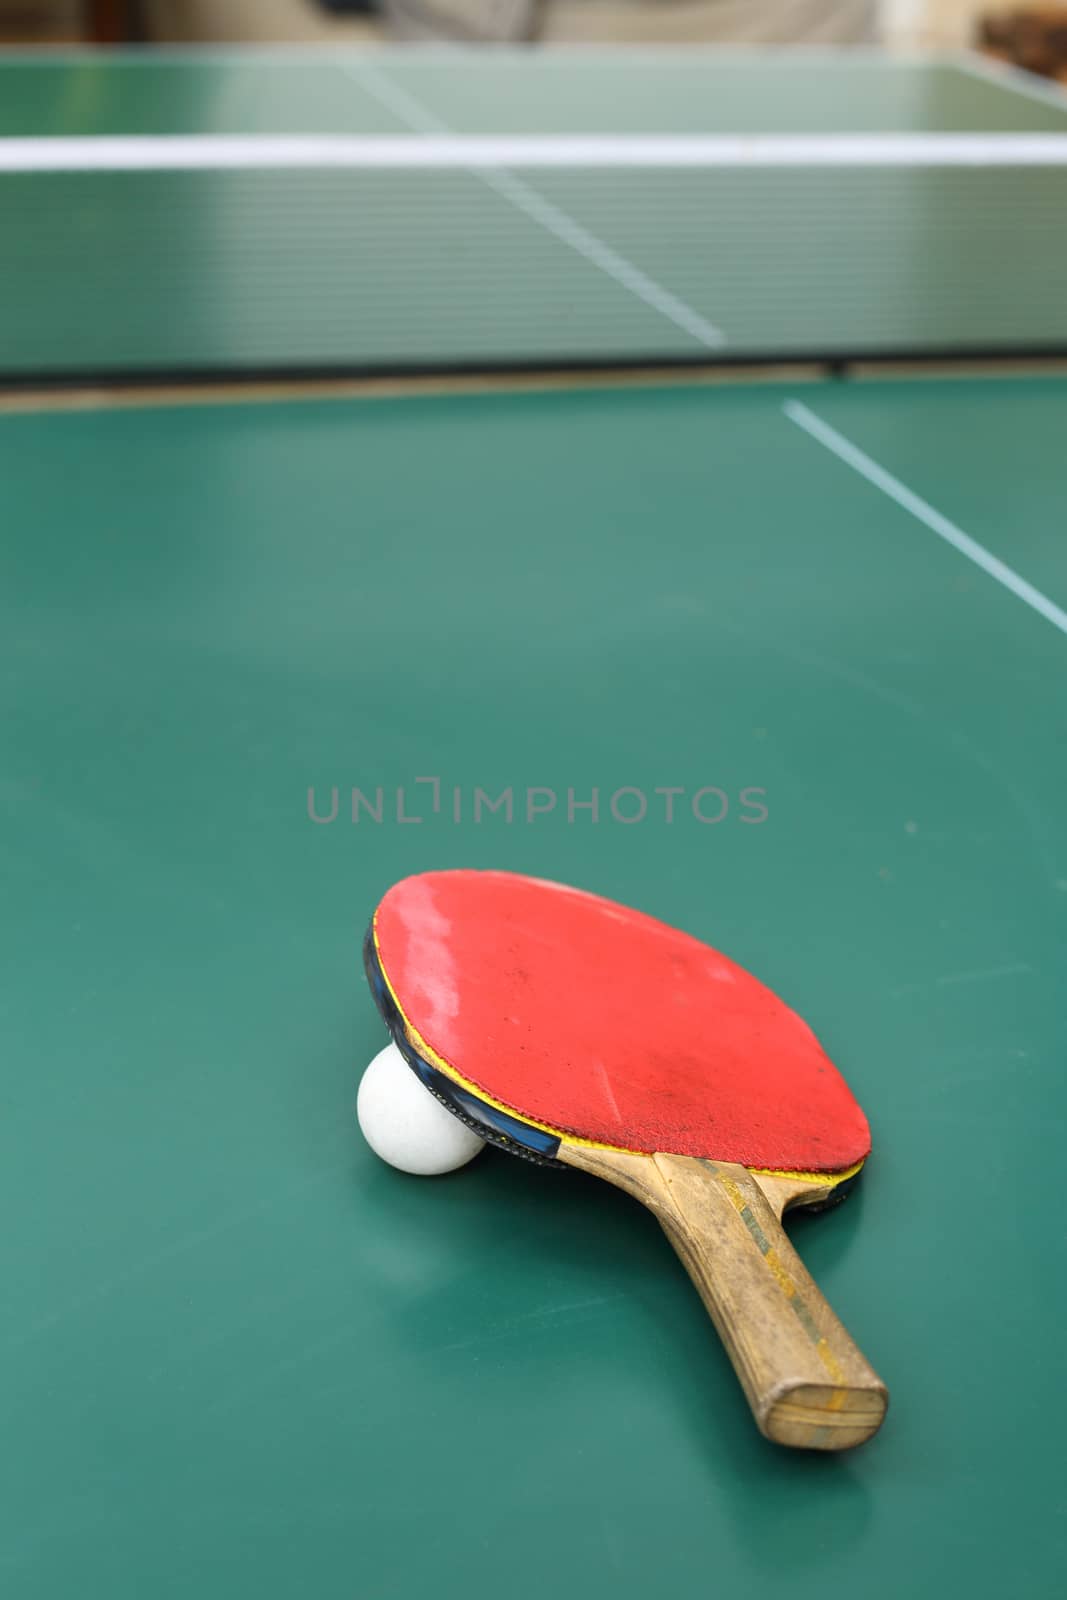 Table tennis bat and ball 